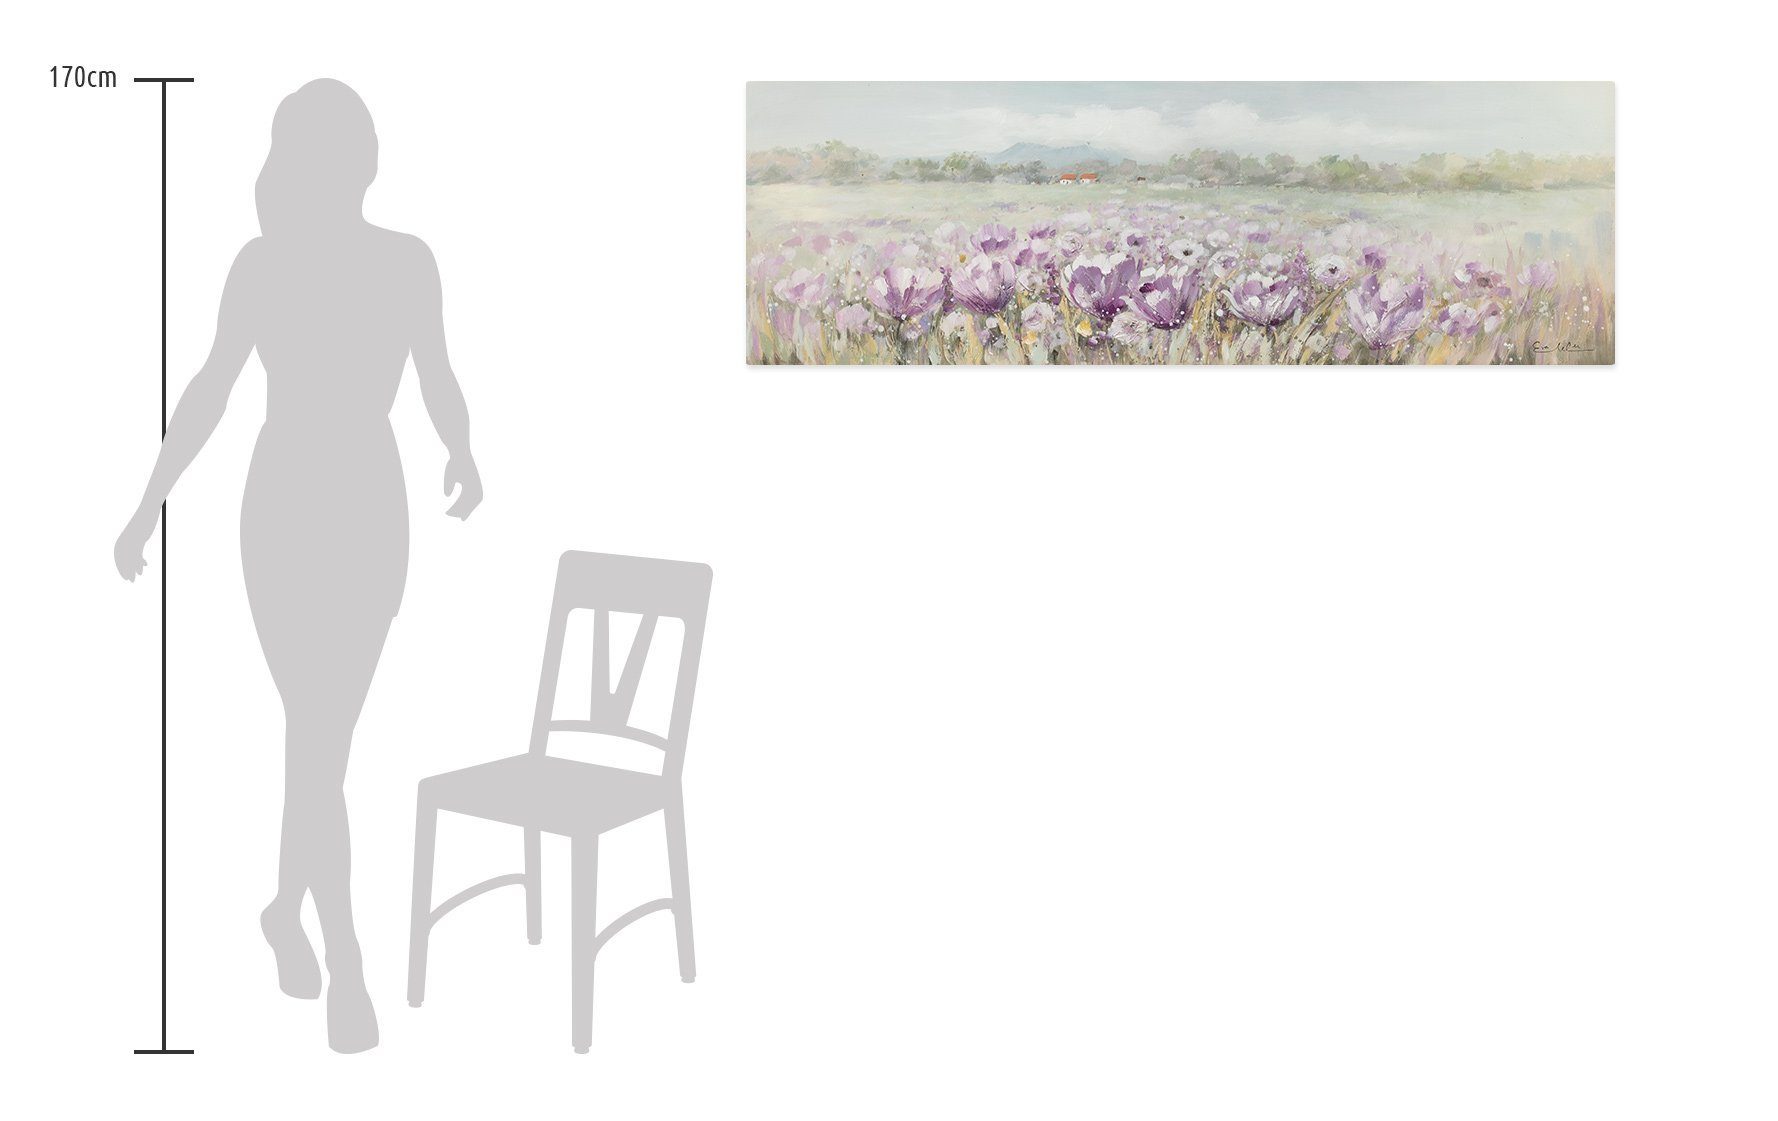 KUNSTLOFT Gemälde Blühender Leinwandbild Wohnzimmer 100% Sommer cm, 150x50 Wandbild HANDGEMALT